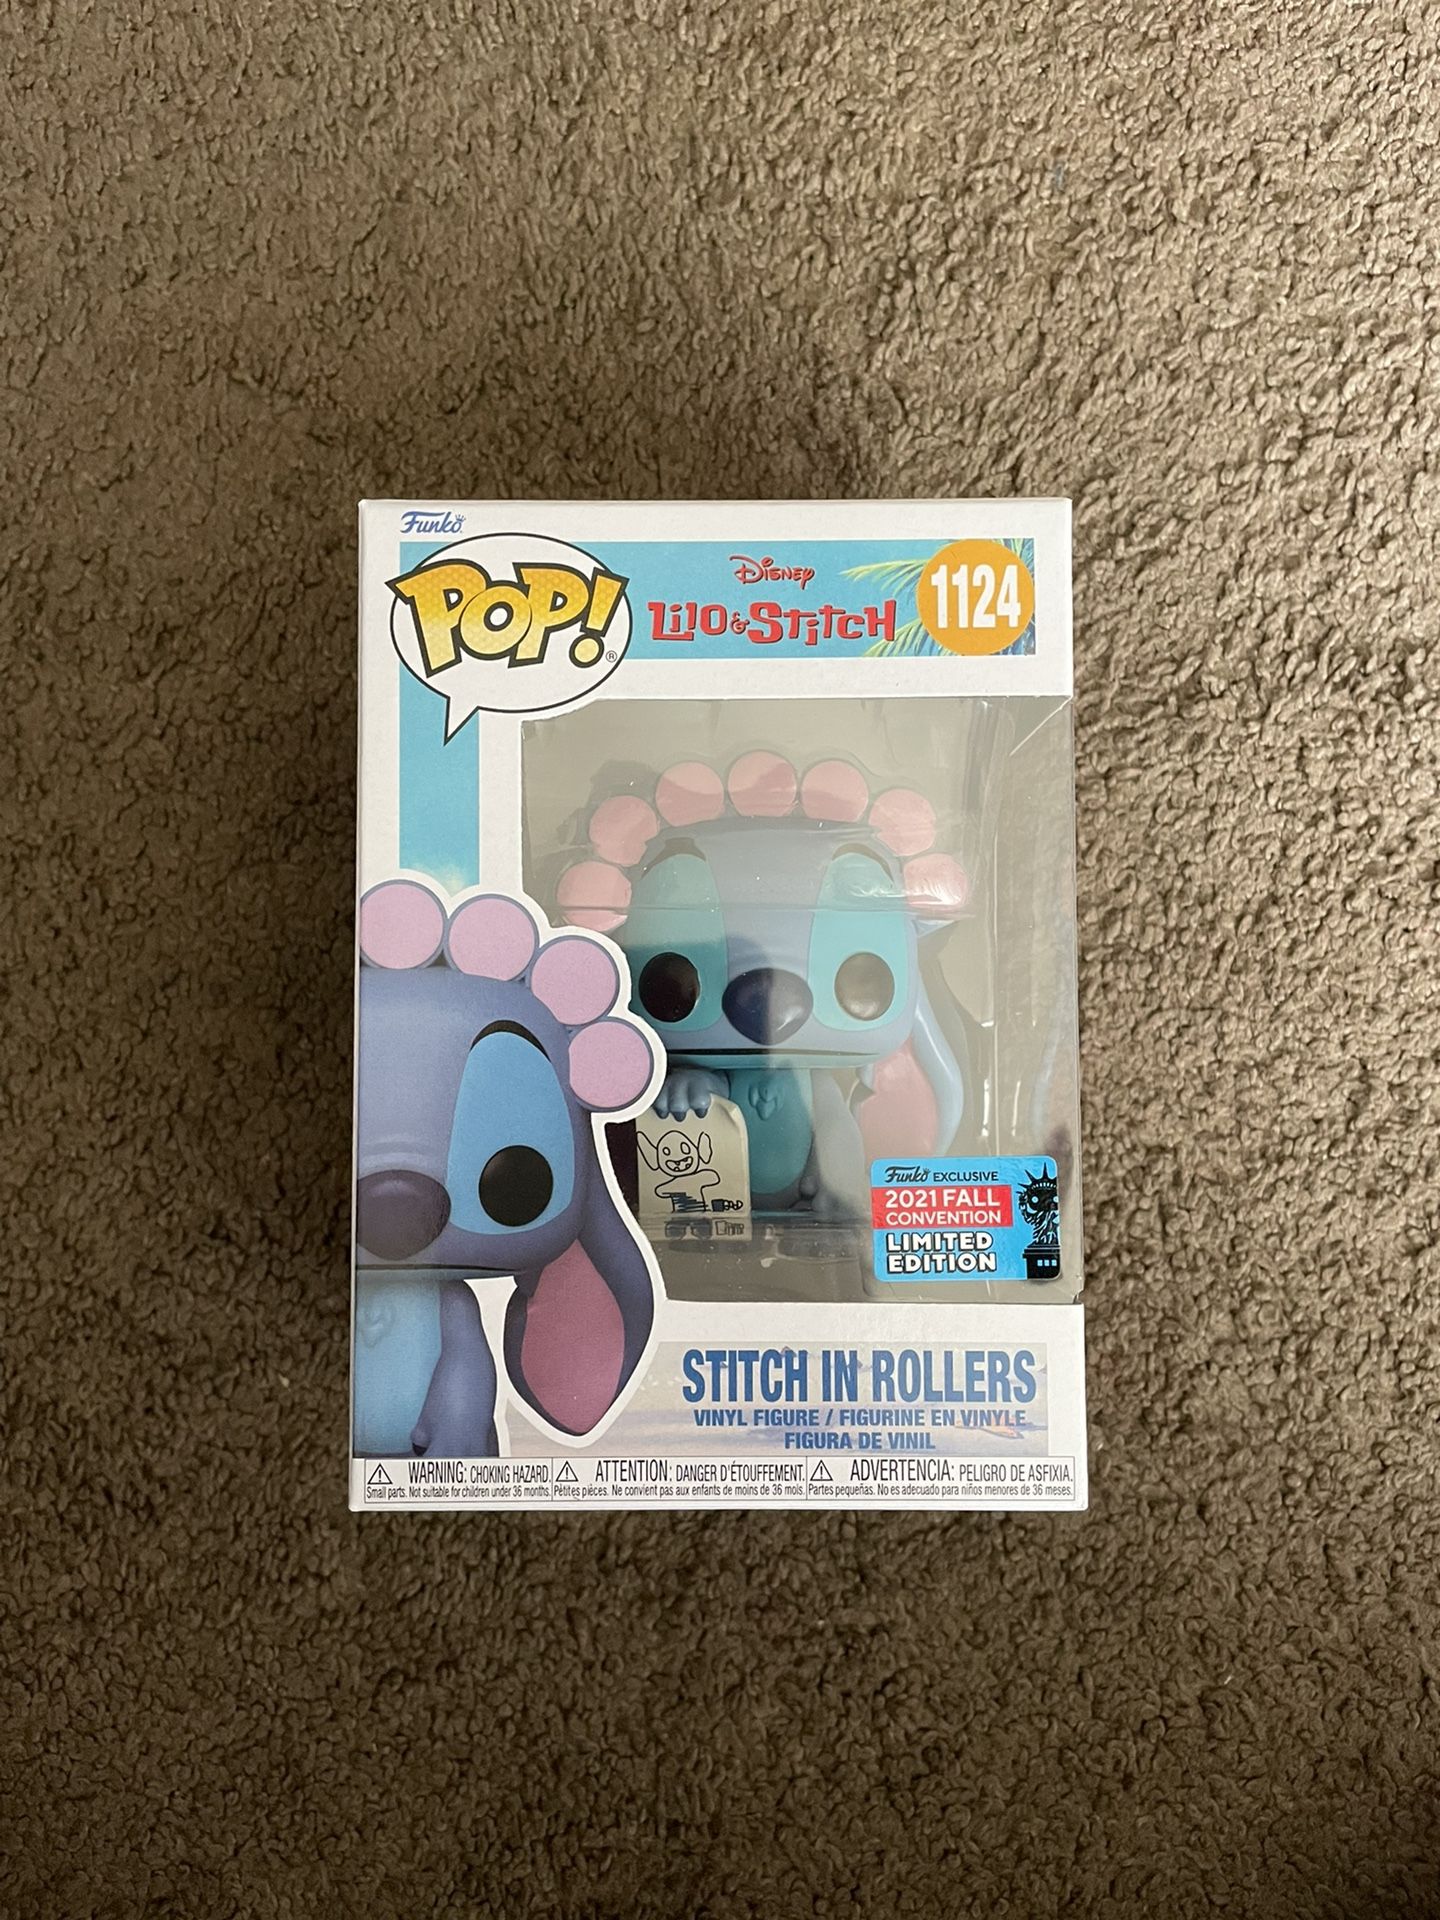 Stitch With Rollers Nycc Funko Pop ( Disney )